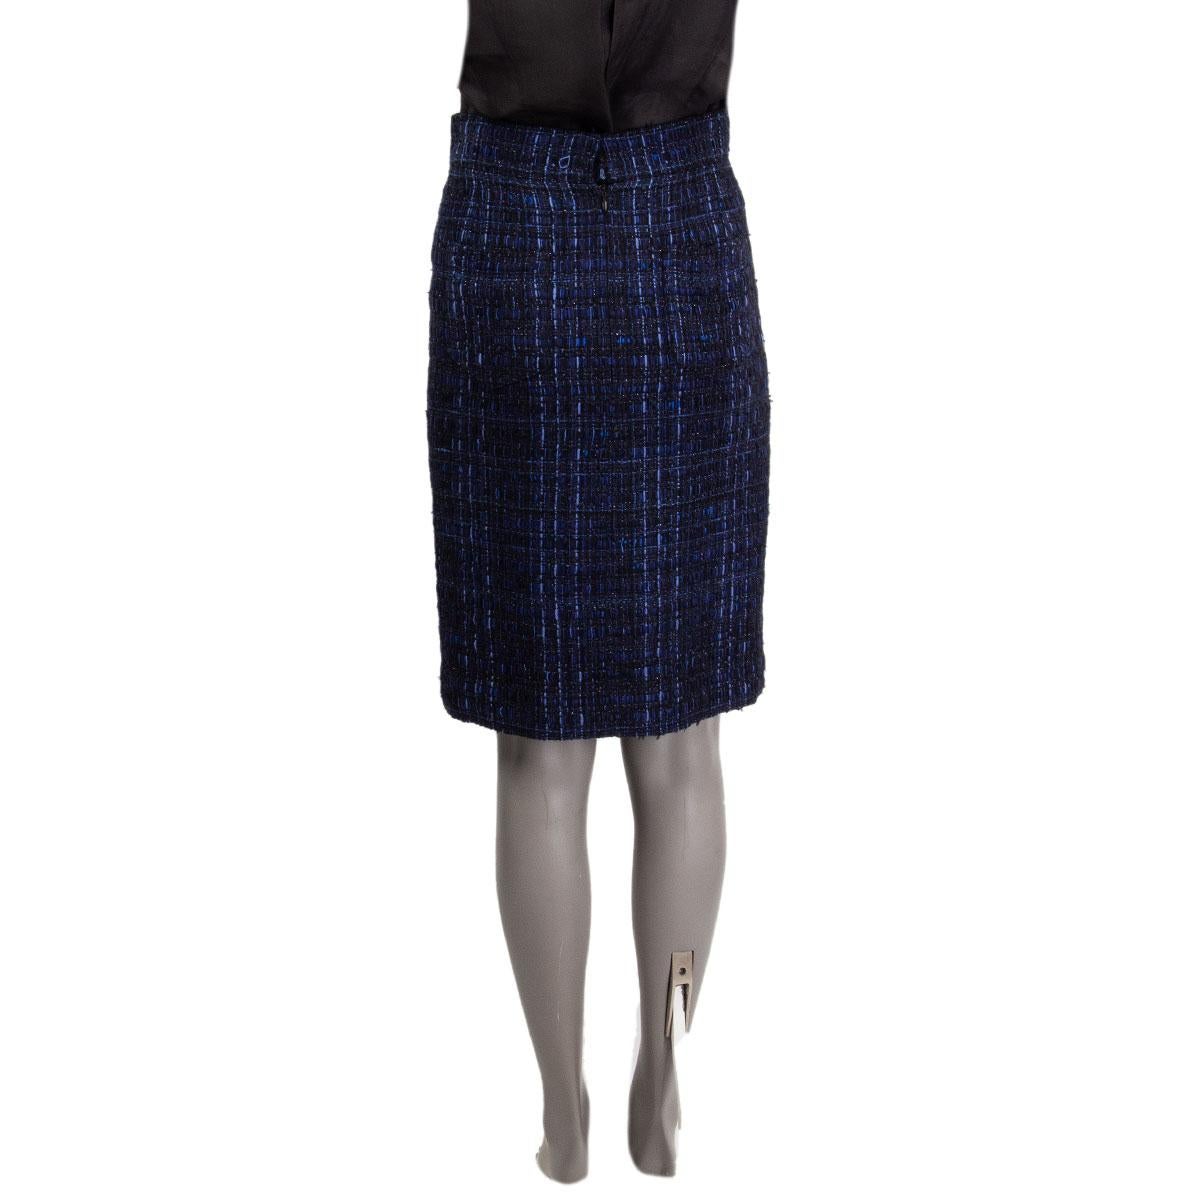 Black CHANEL blue & black cotton blend BOUCLE TWEED Pencil Skirt 38 S